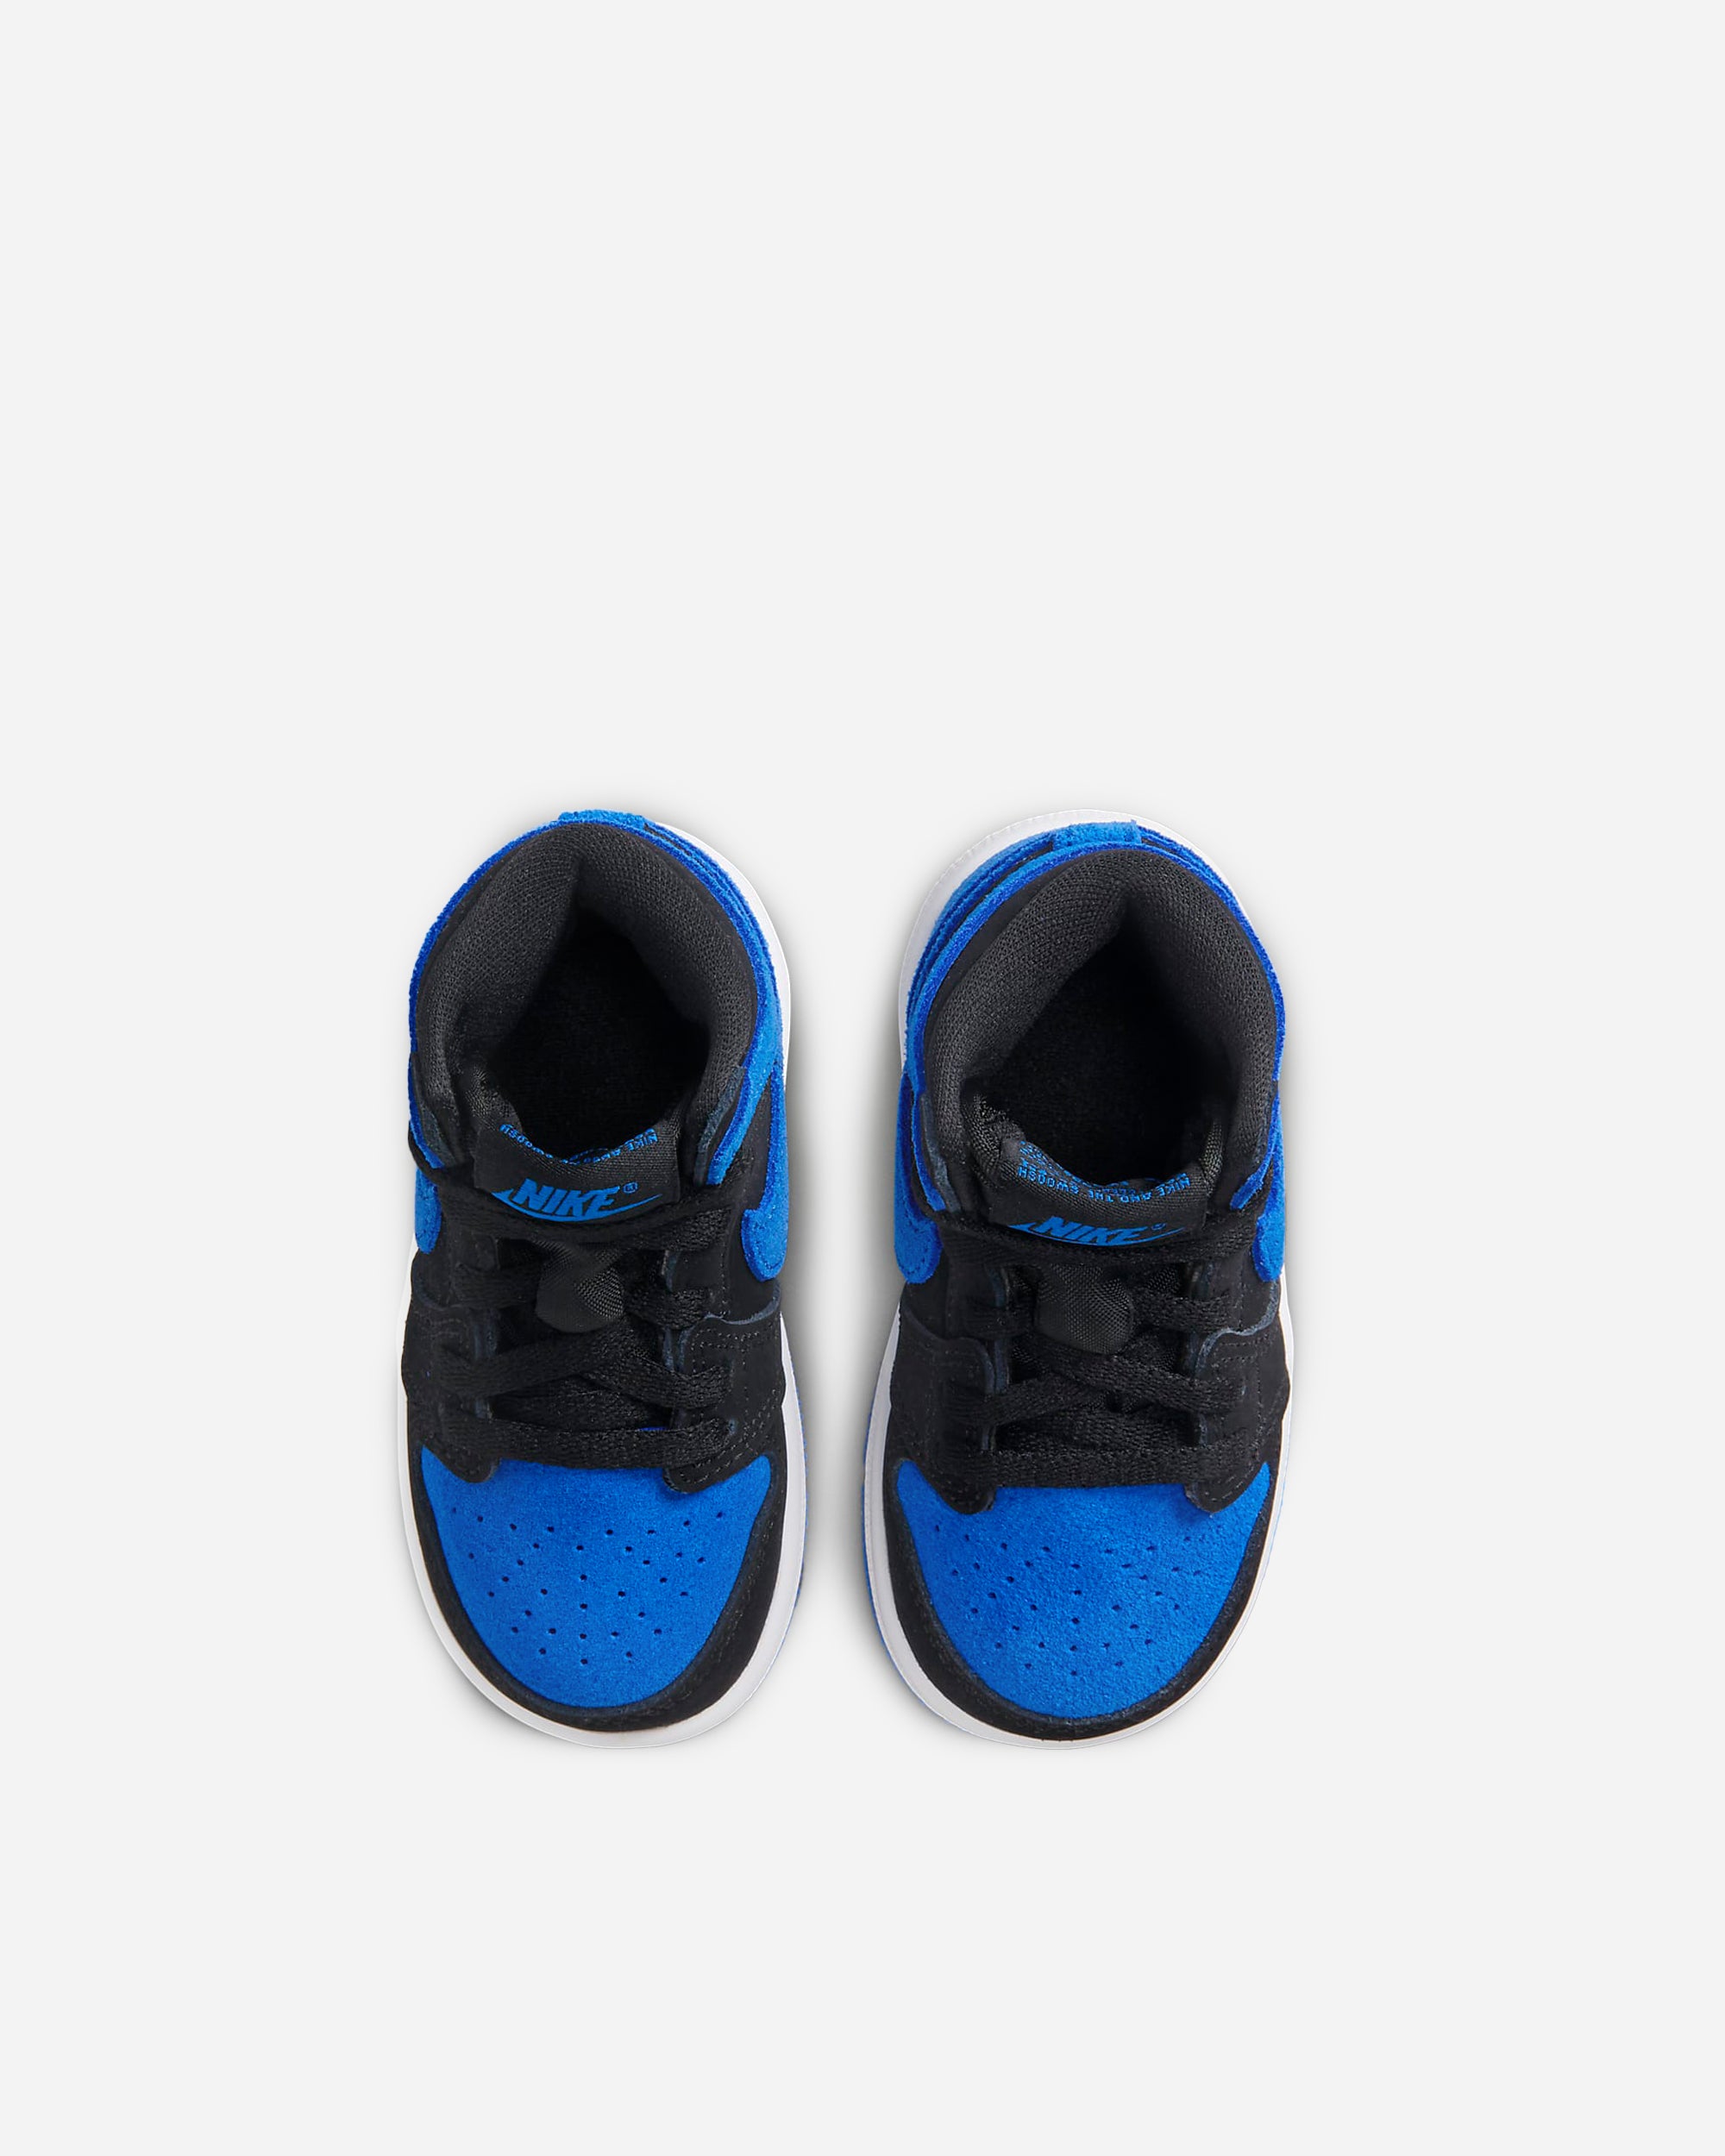 Jordan Brand Jordan 1 Retro High 'Royal Reimagined' (Toddler) BLACK/ROYAL BLUE-WHITE FD1413-042